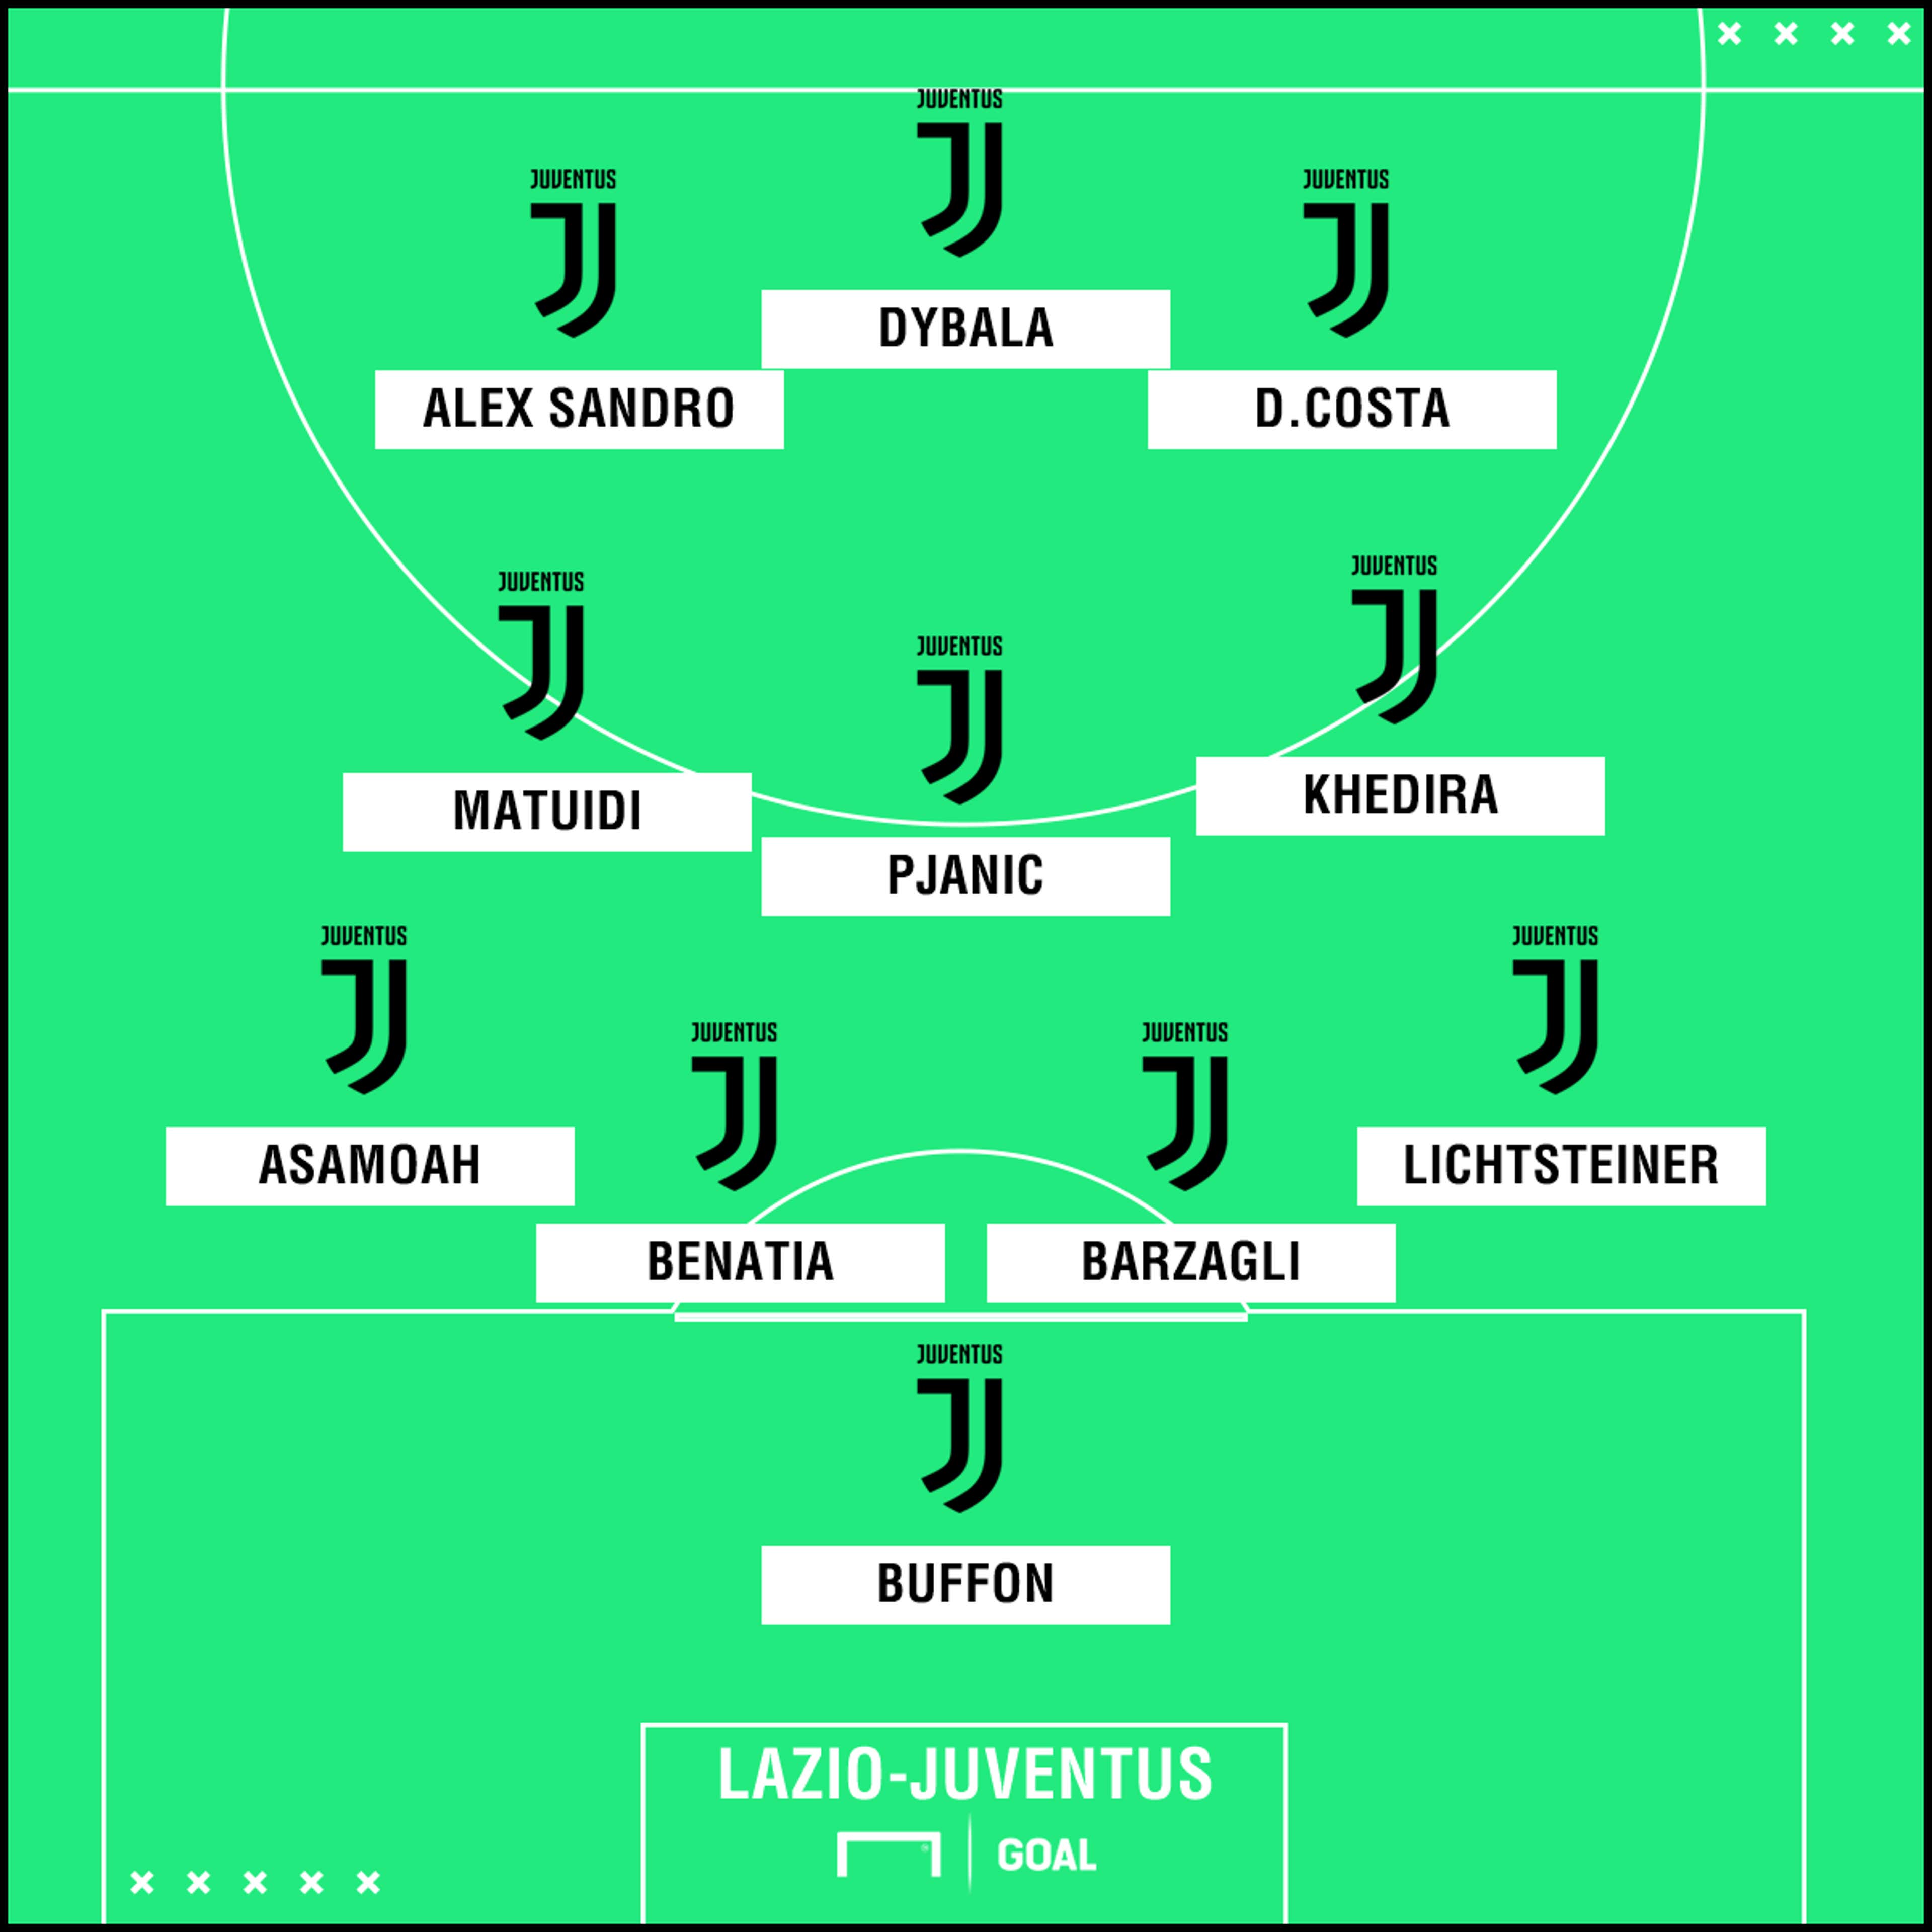 Lazio-Juventus lineup